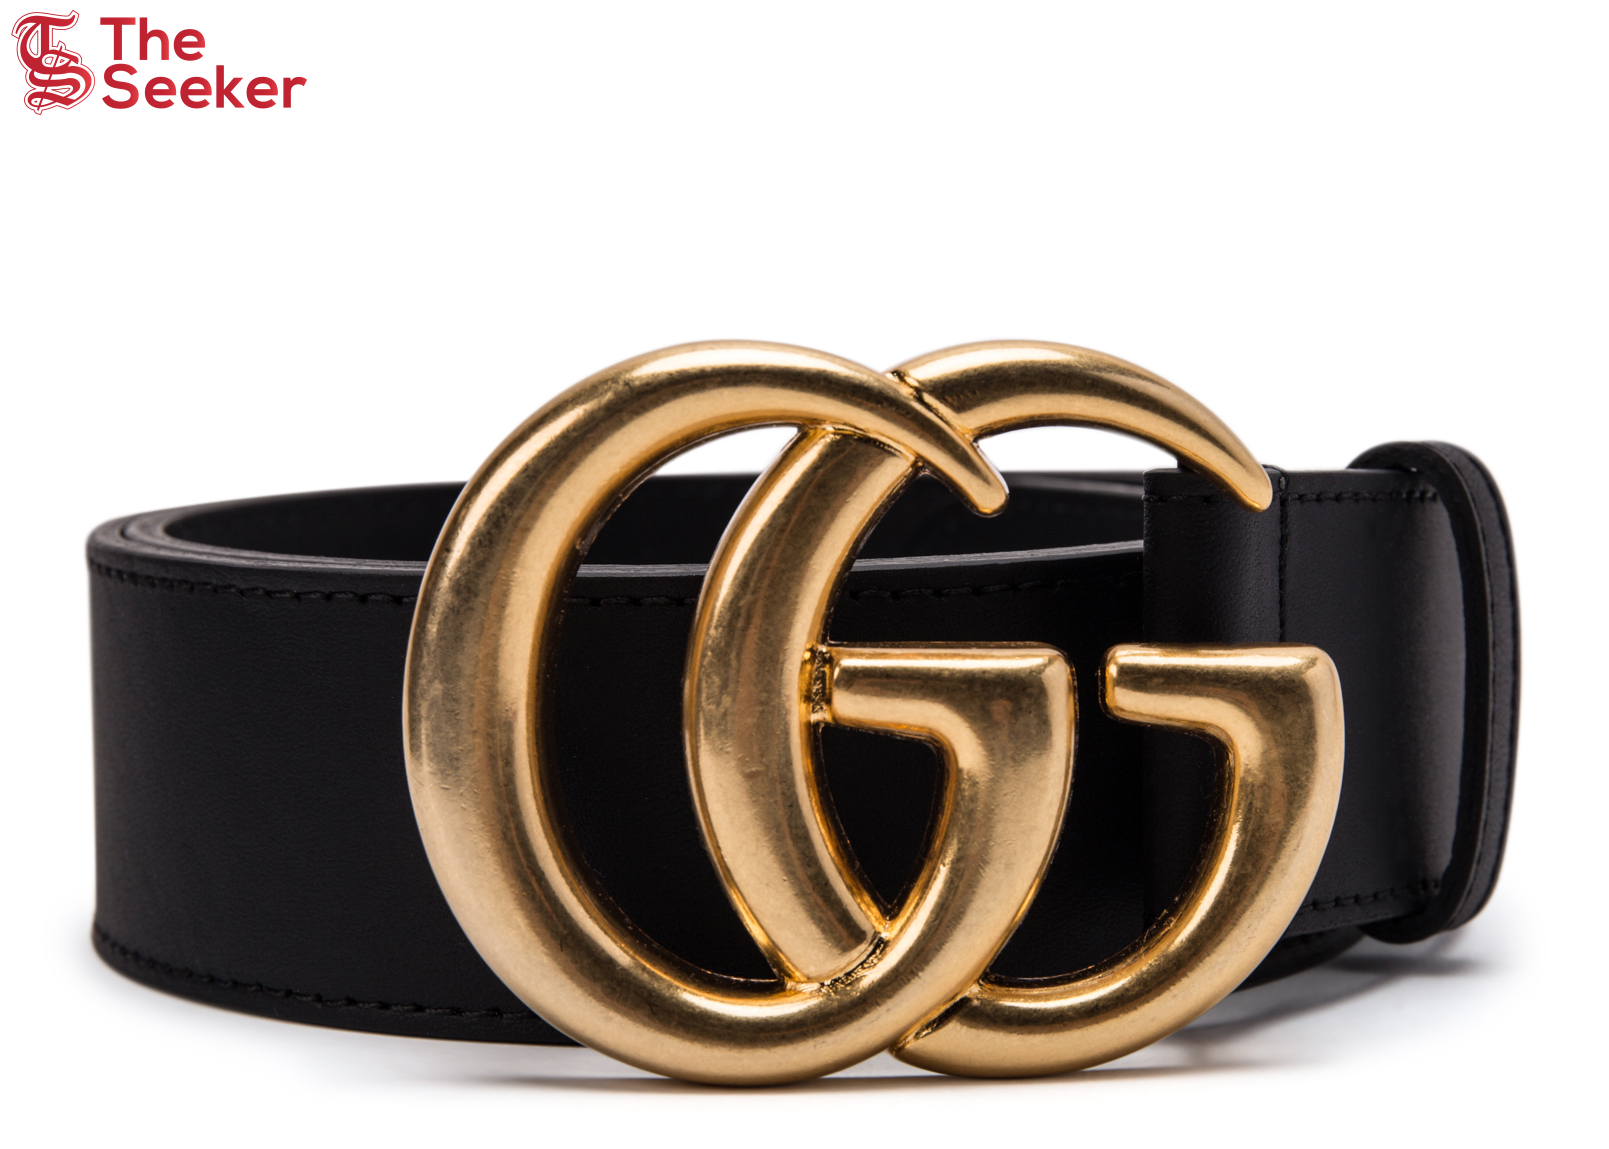 Gucci Double G Wide Leather Belt Antique Brass Buckle 1.5 Width Black